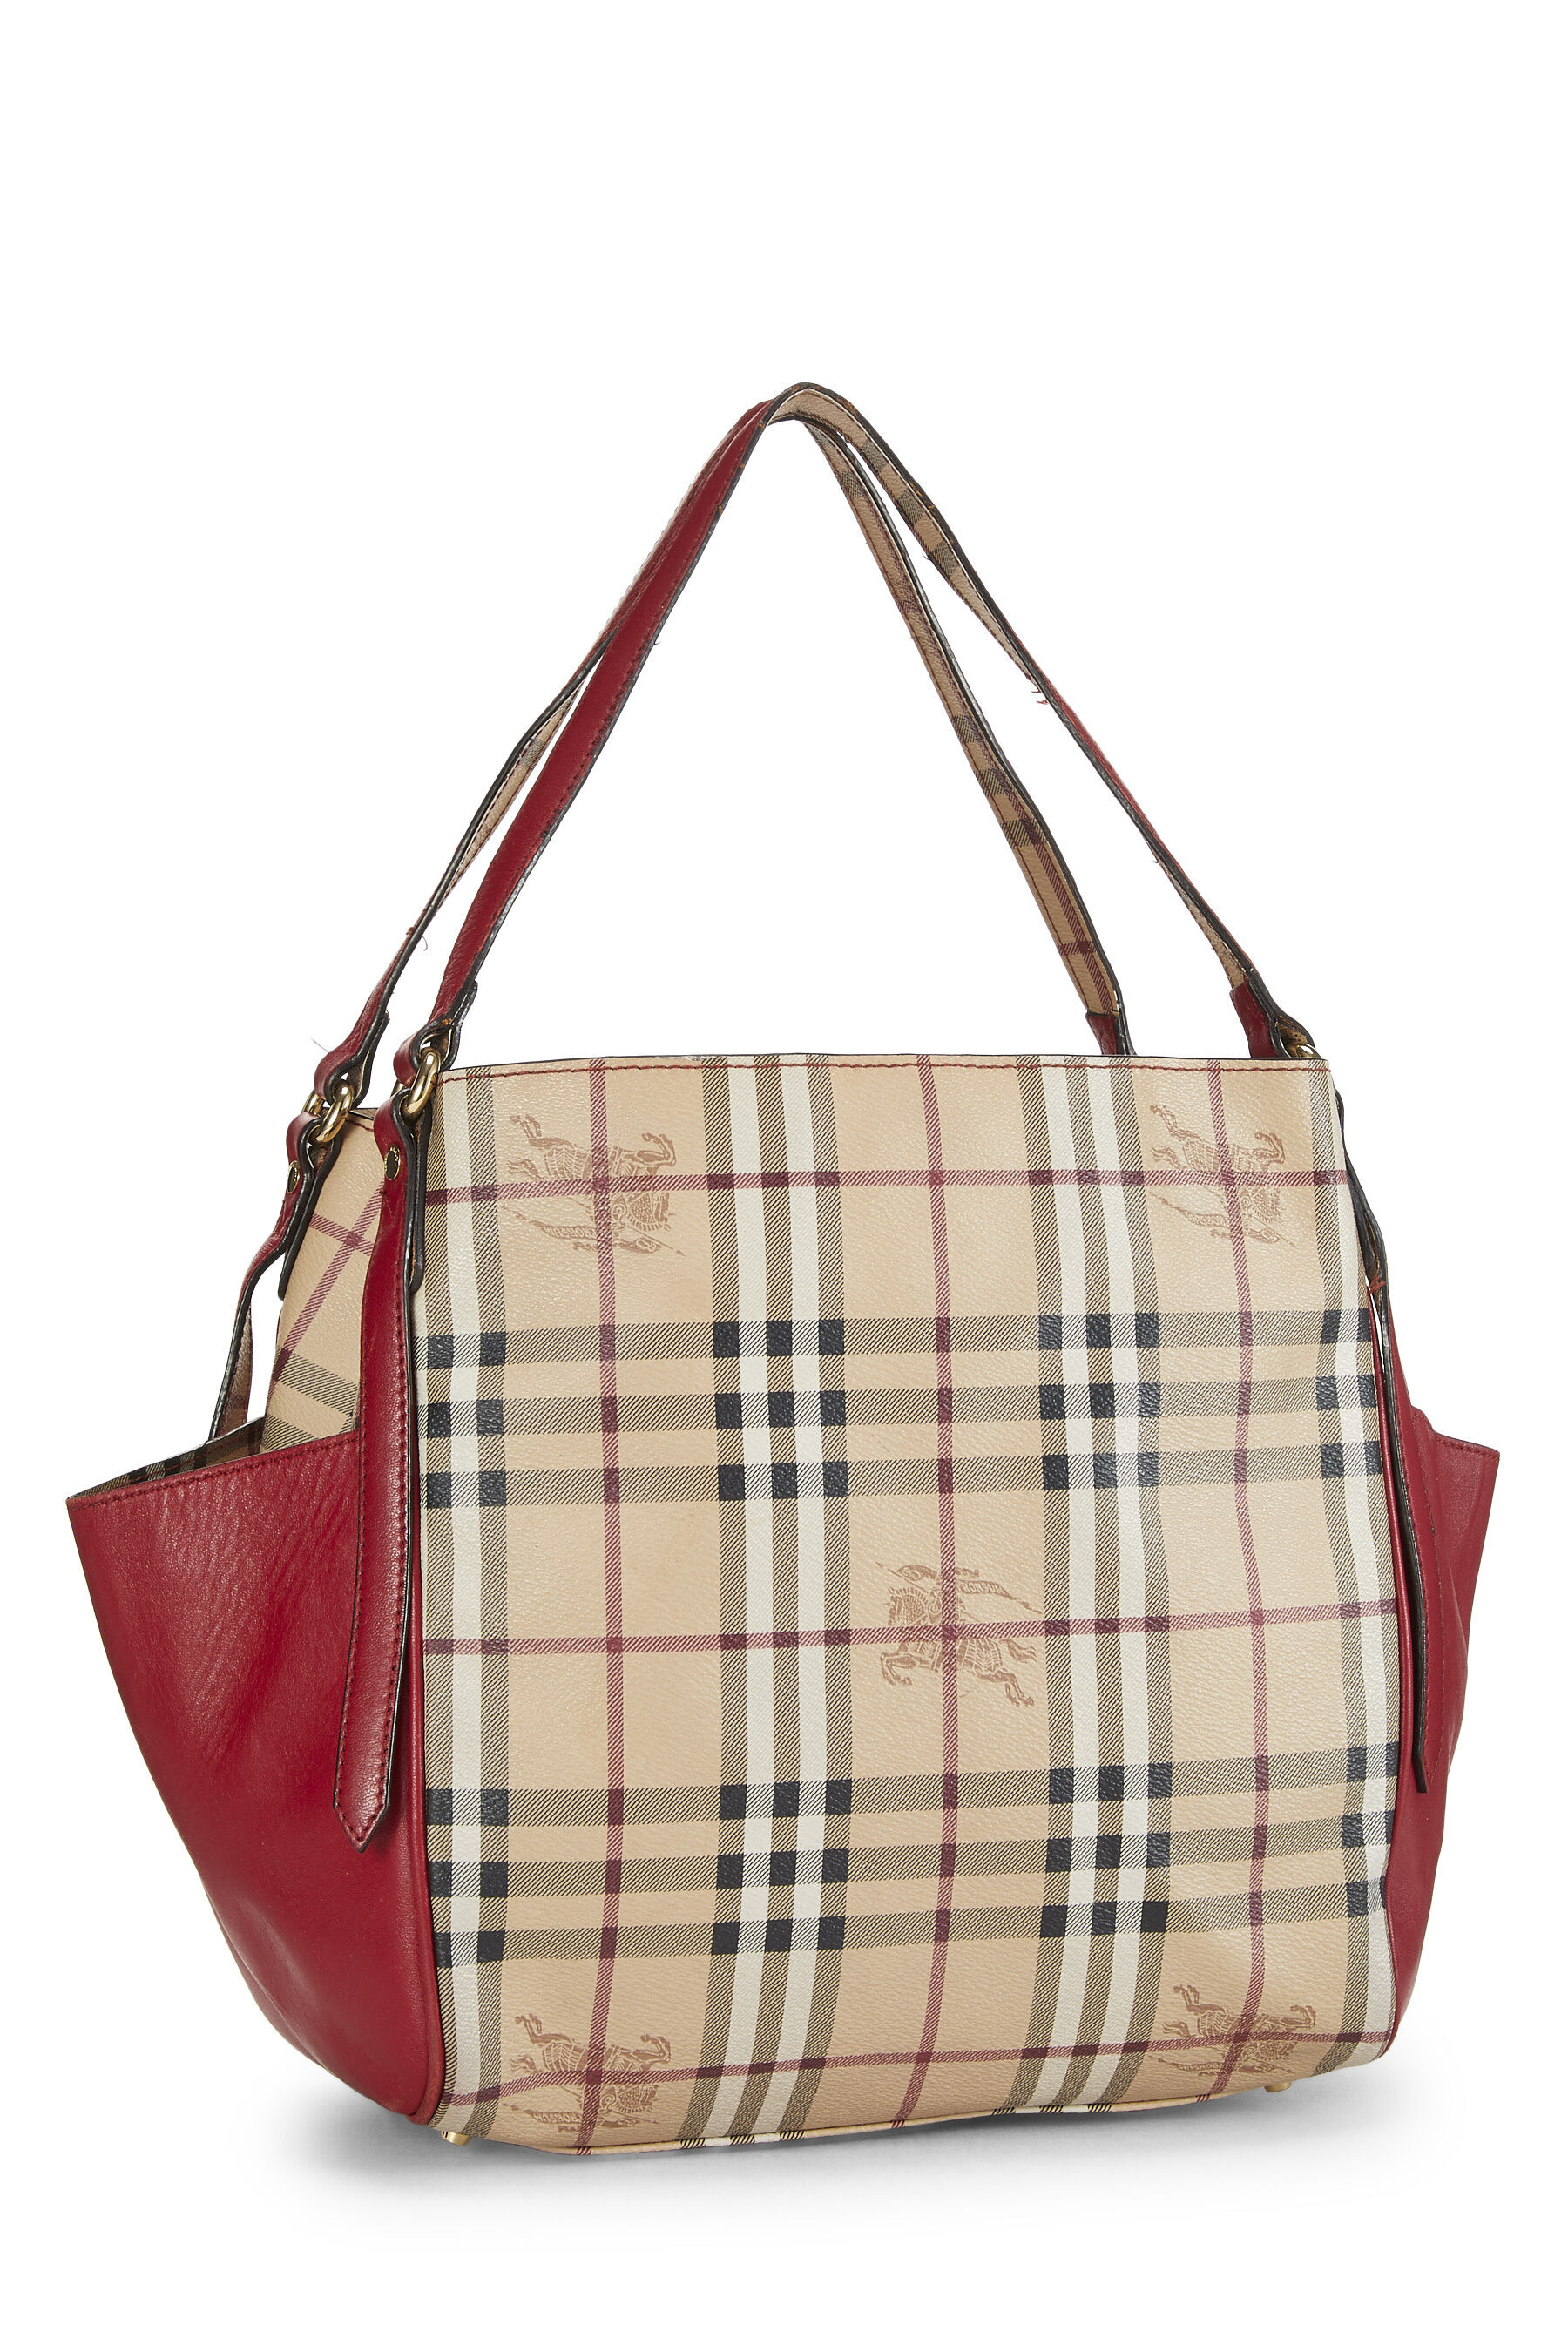 Shop Burberry Vintage Bags | Burberry Used Bags | WGACA